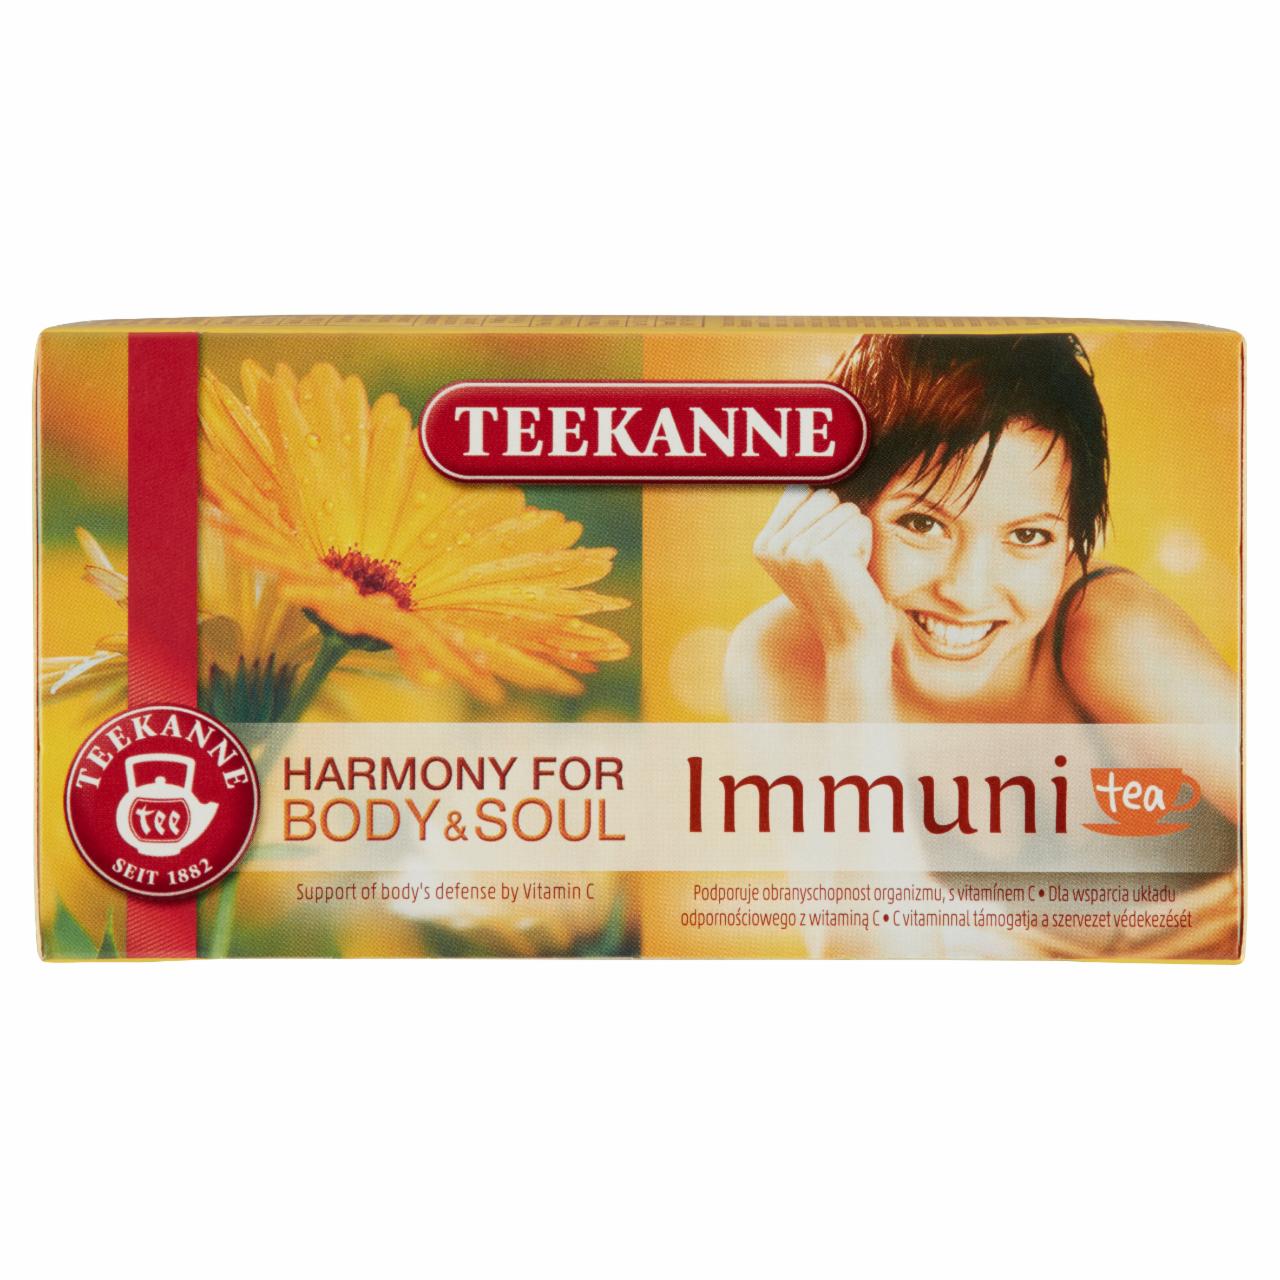 Képek - Teekanne Harmony for Body & Soul Immuni Tea herbatea C vitaminnal 20 filter 40 g